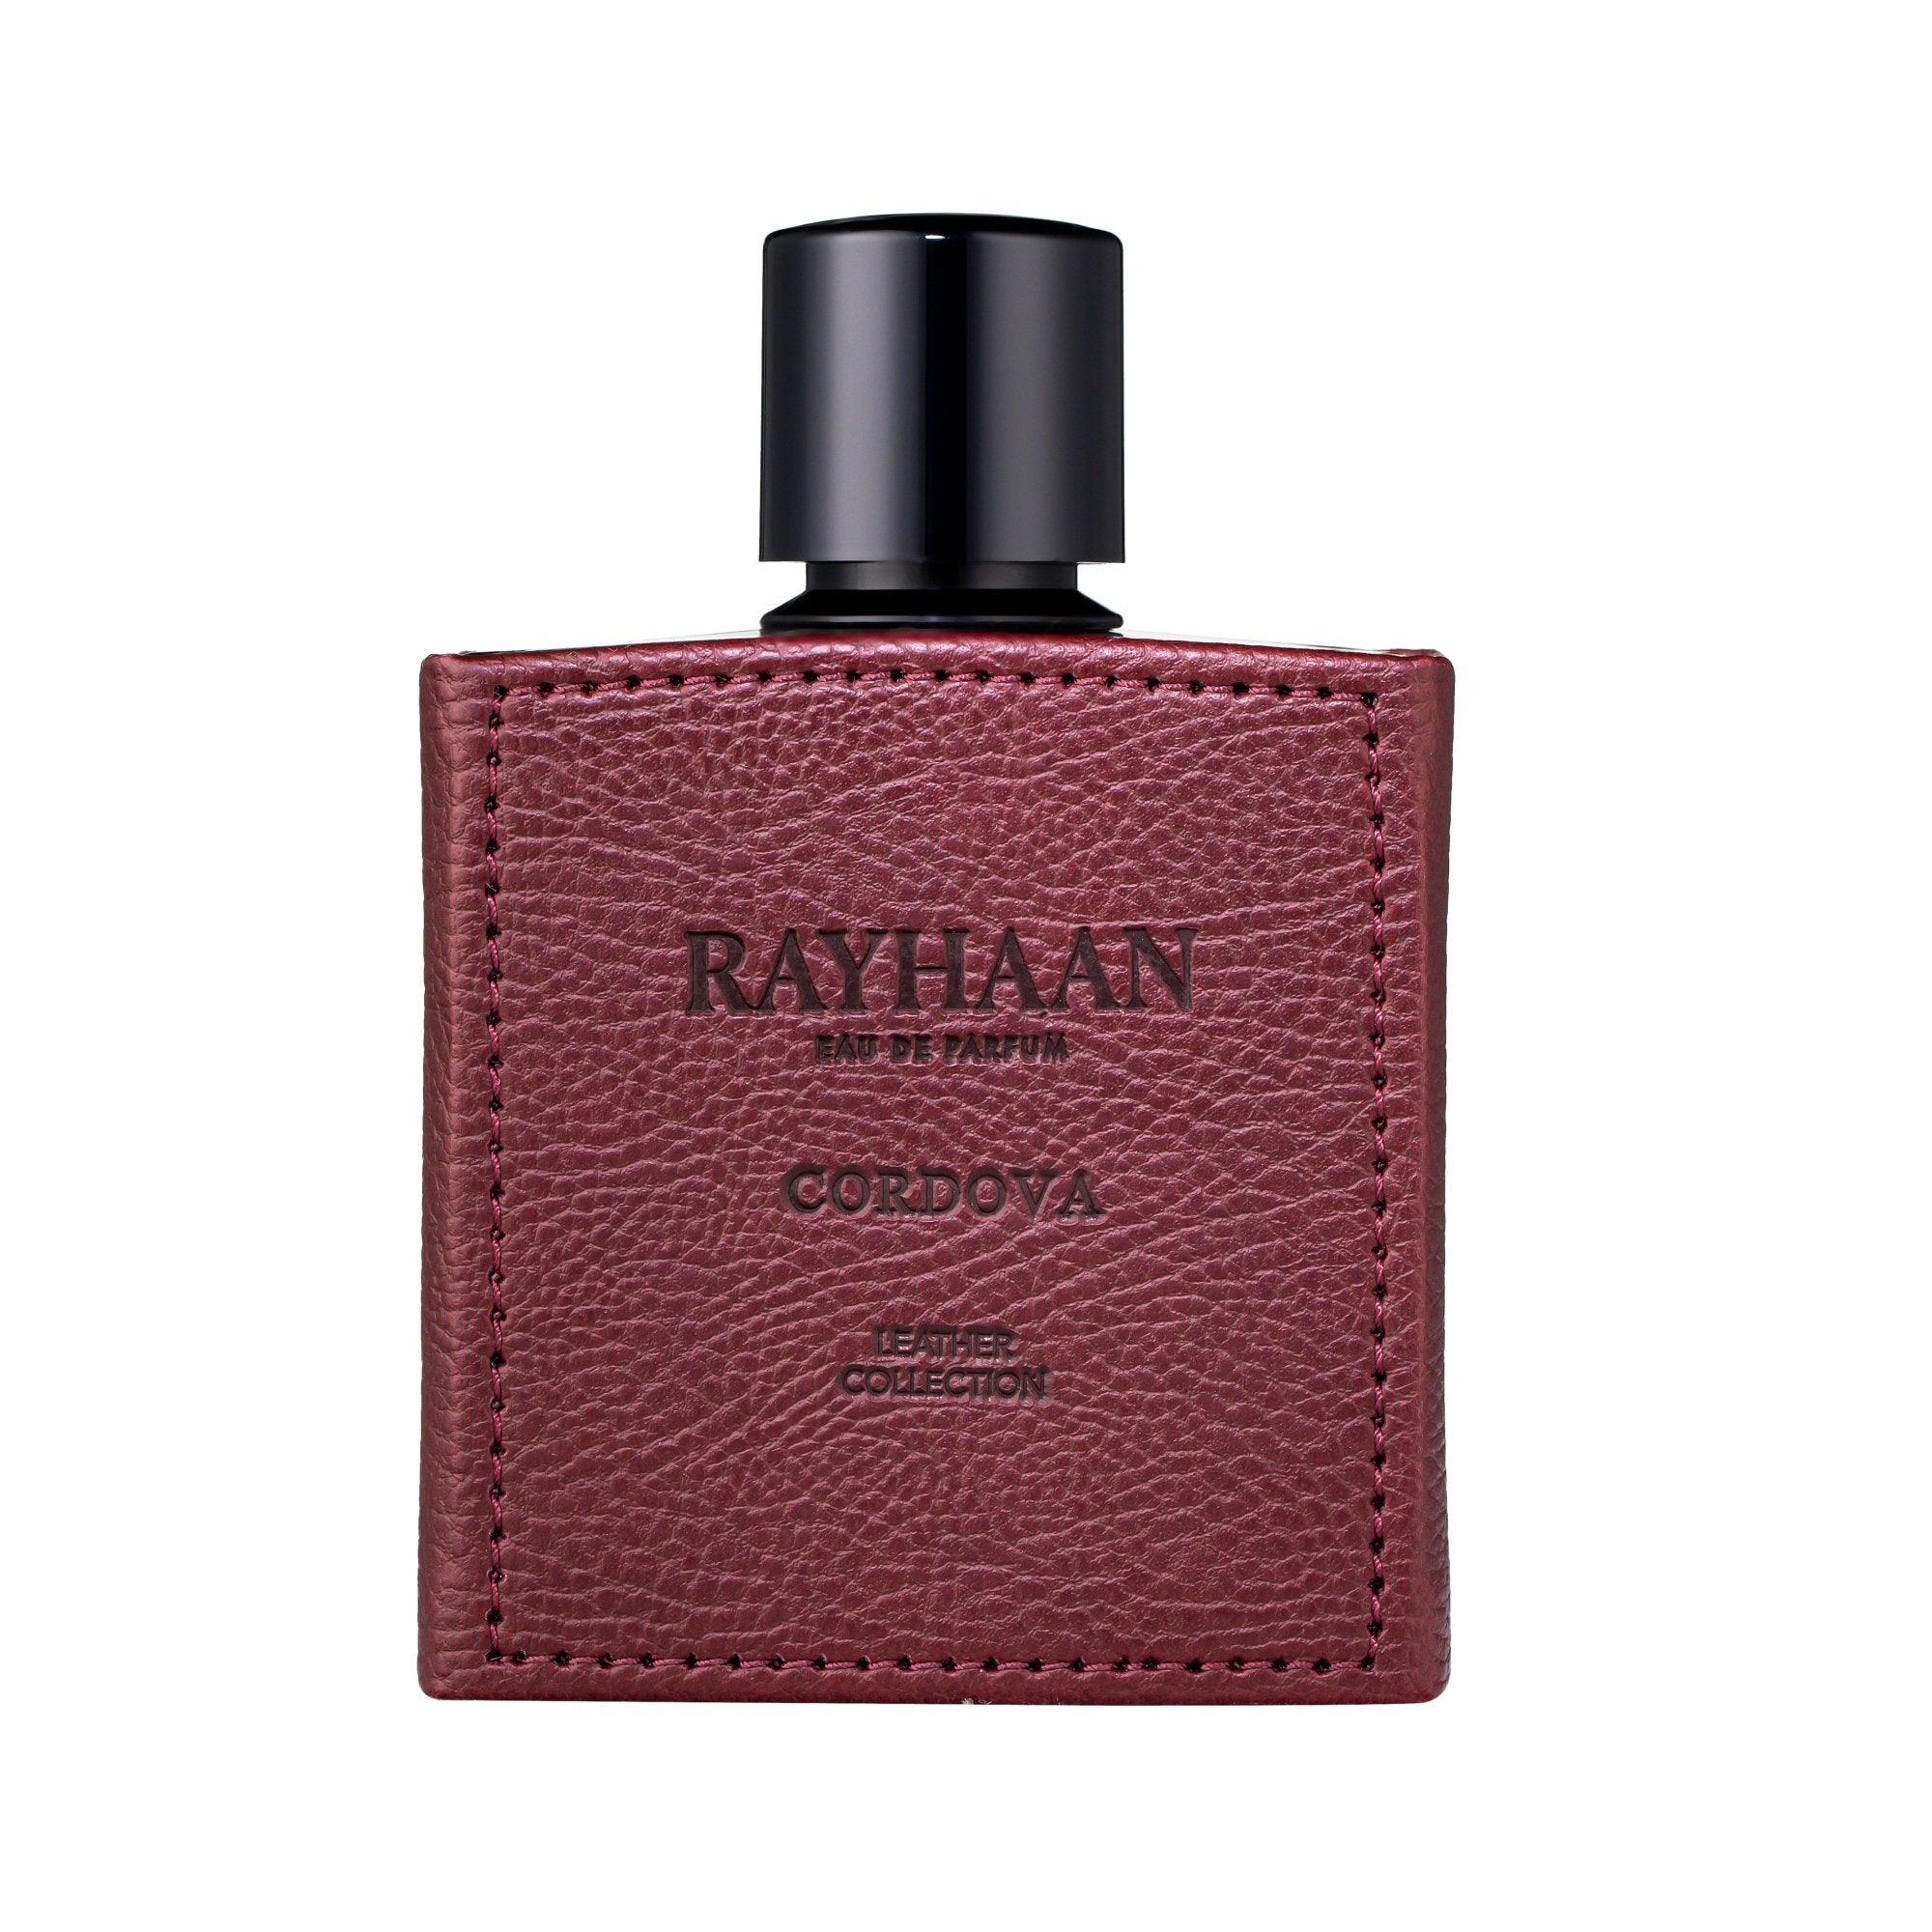 CORDOVA - Rayhaan Perfumes